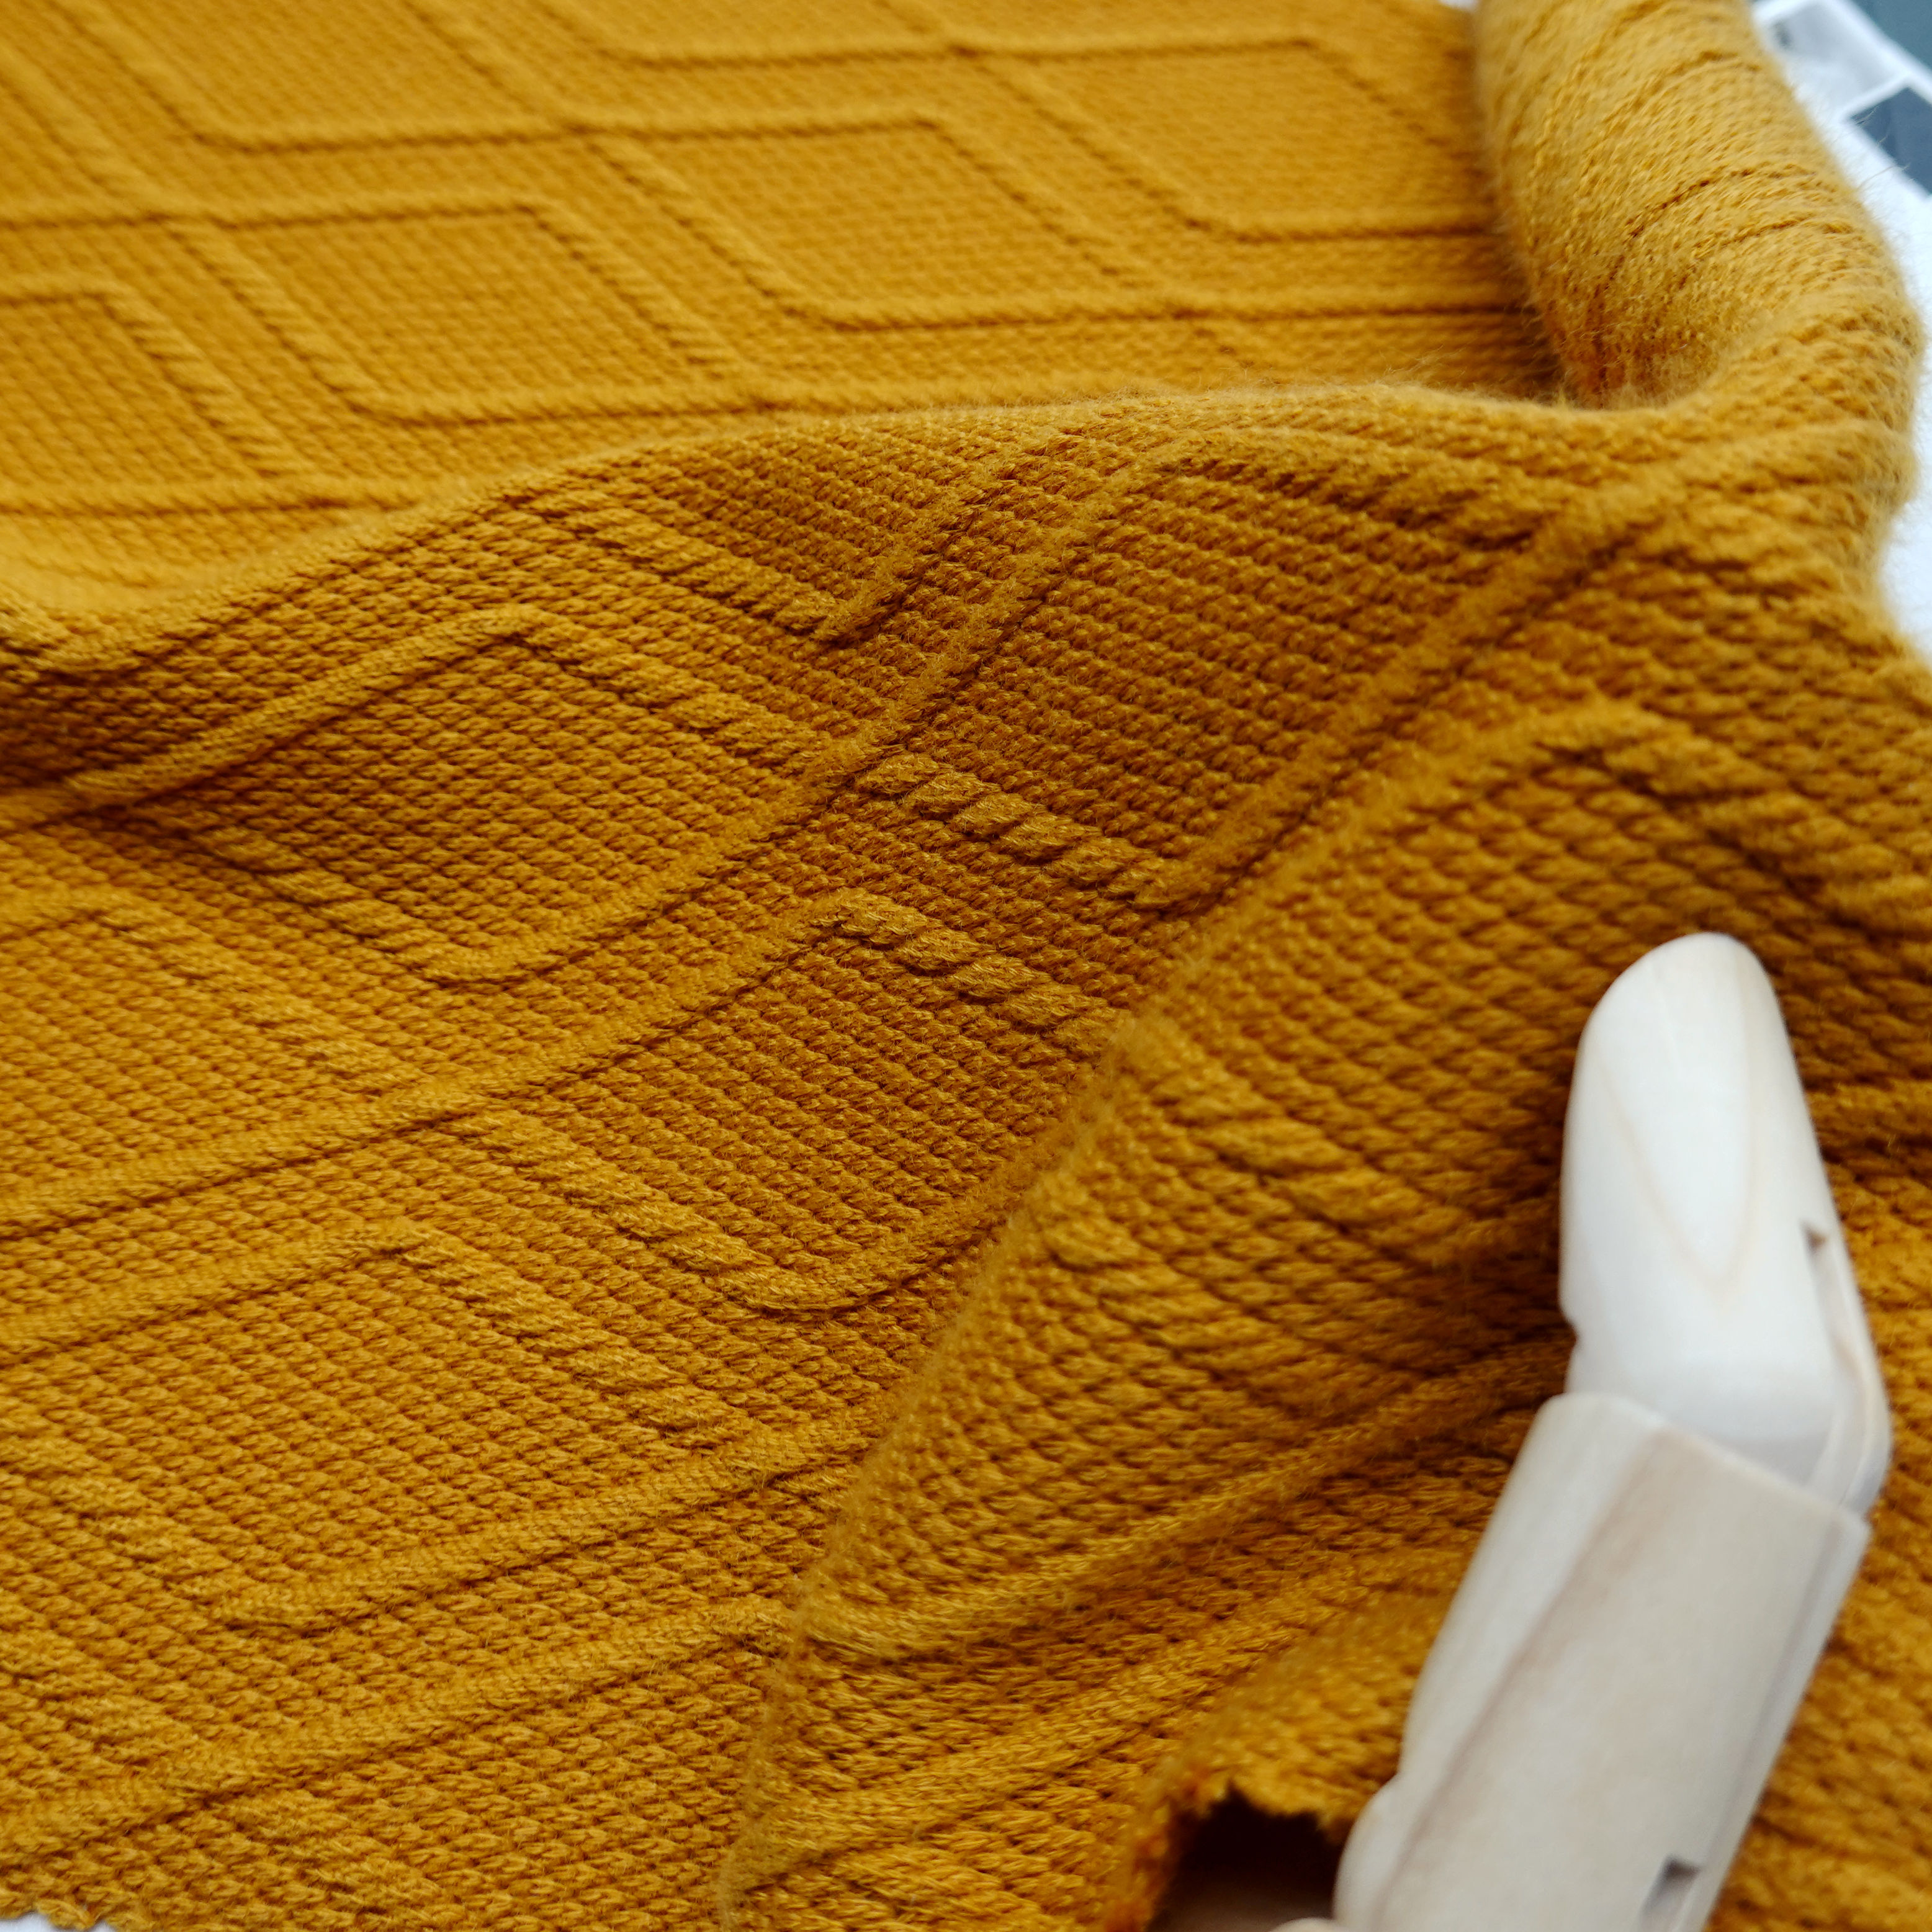 Knit jacquard fabric